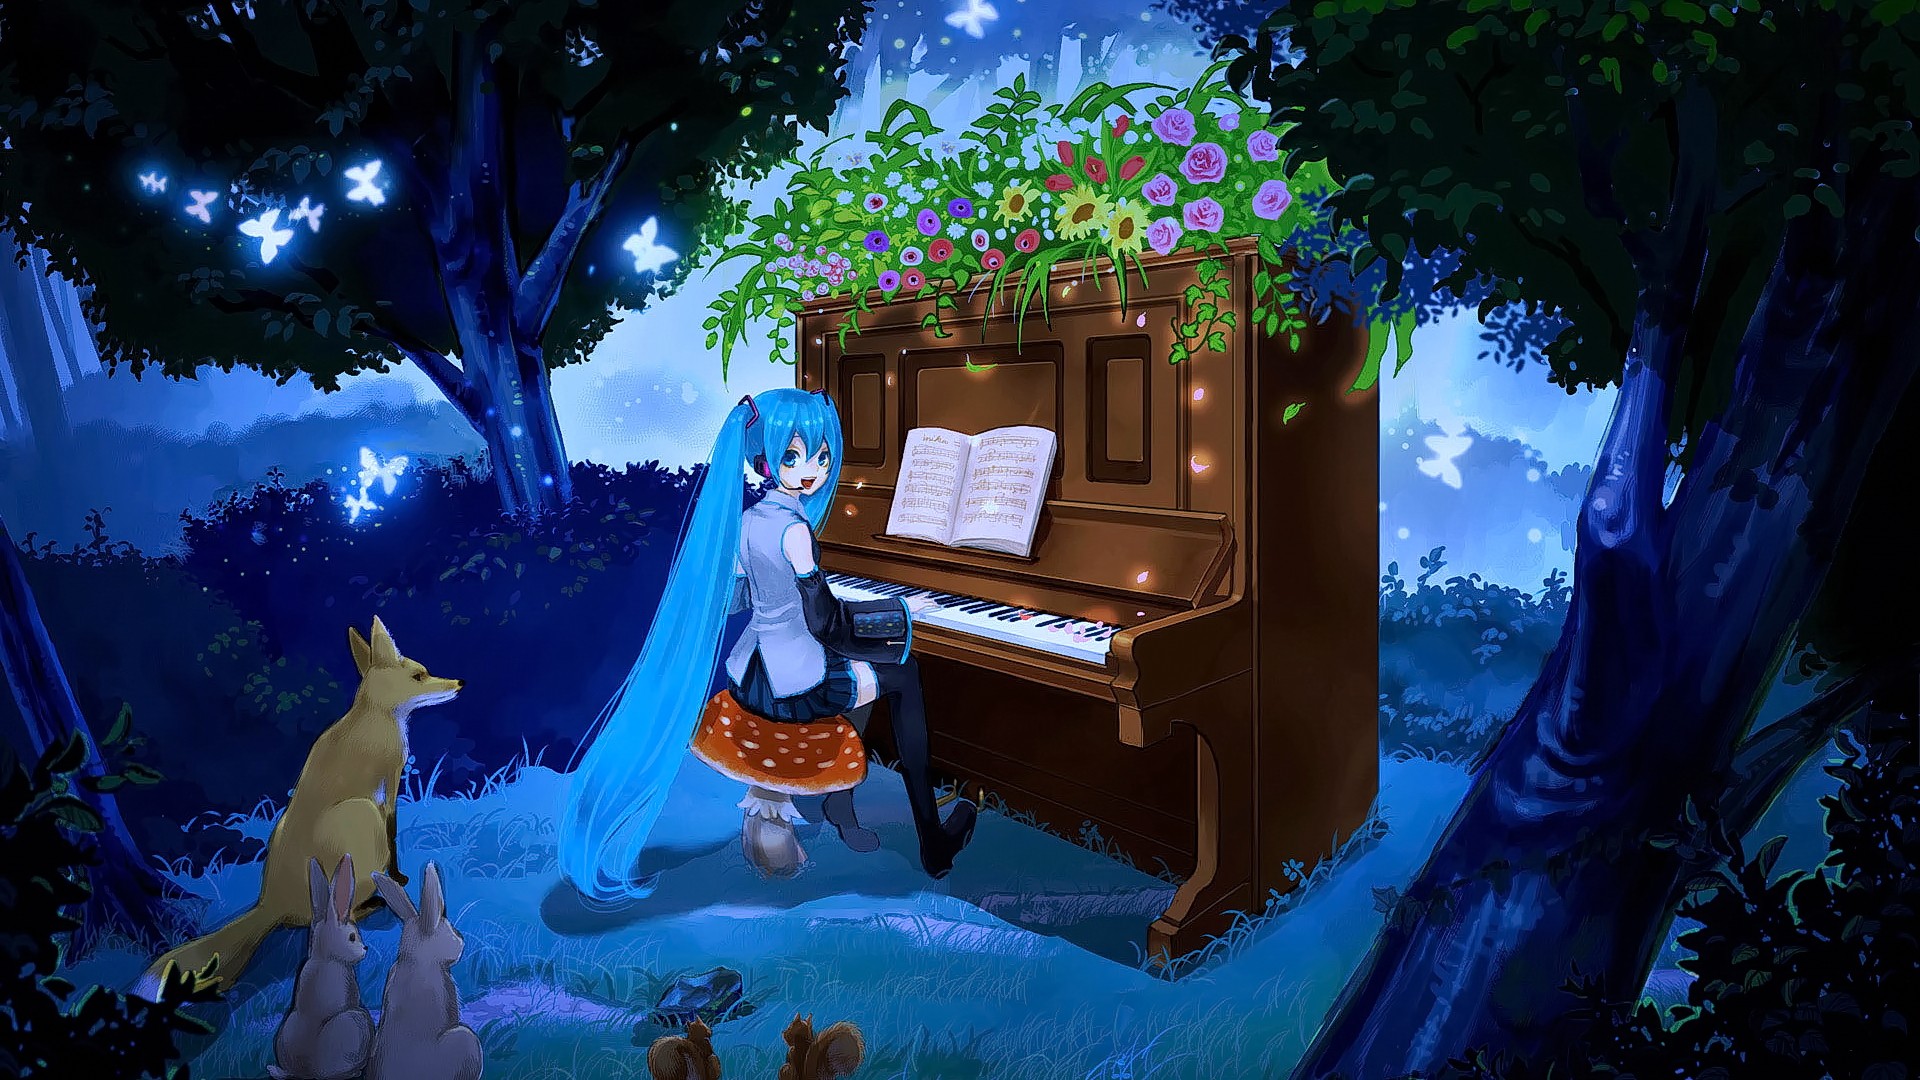 Anime 1920x1080 anime anime girls cyan hair long hair blue eyes Vocaloid Hatsune Miku animals forest musical instrument piano fantasy art flowers plants trees fantasy girl